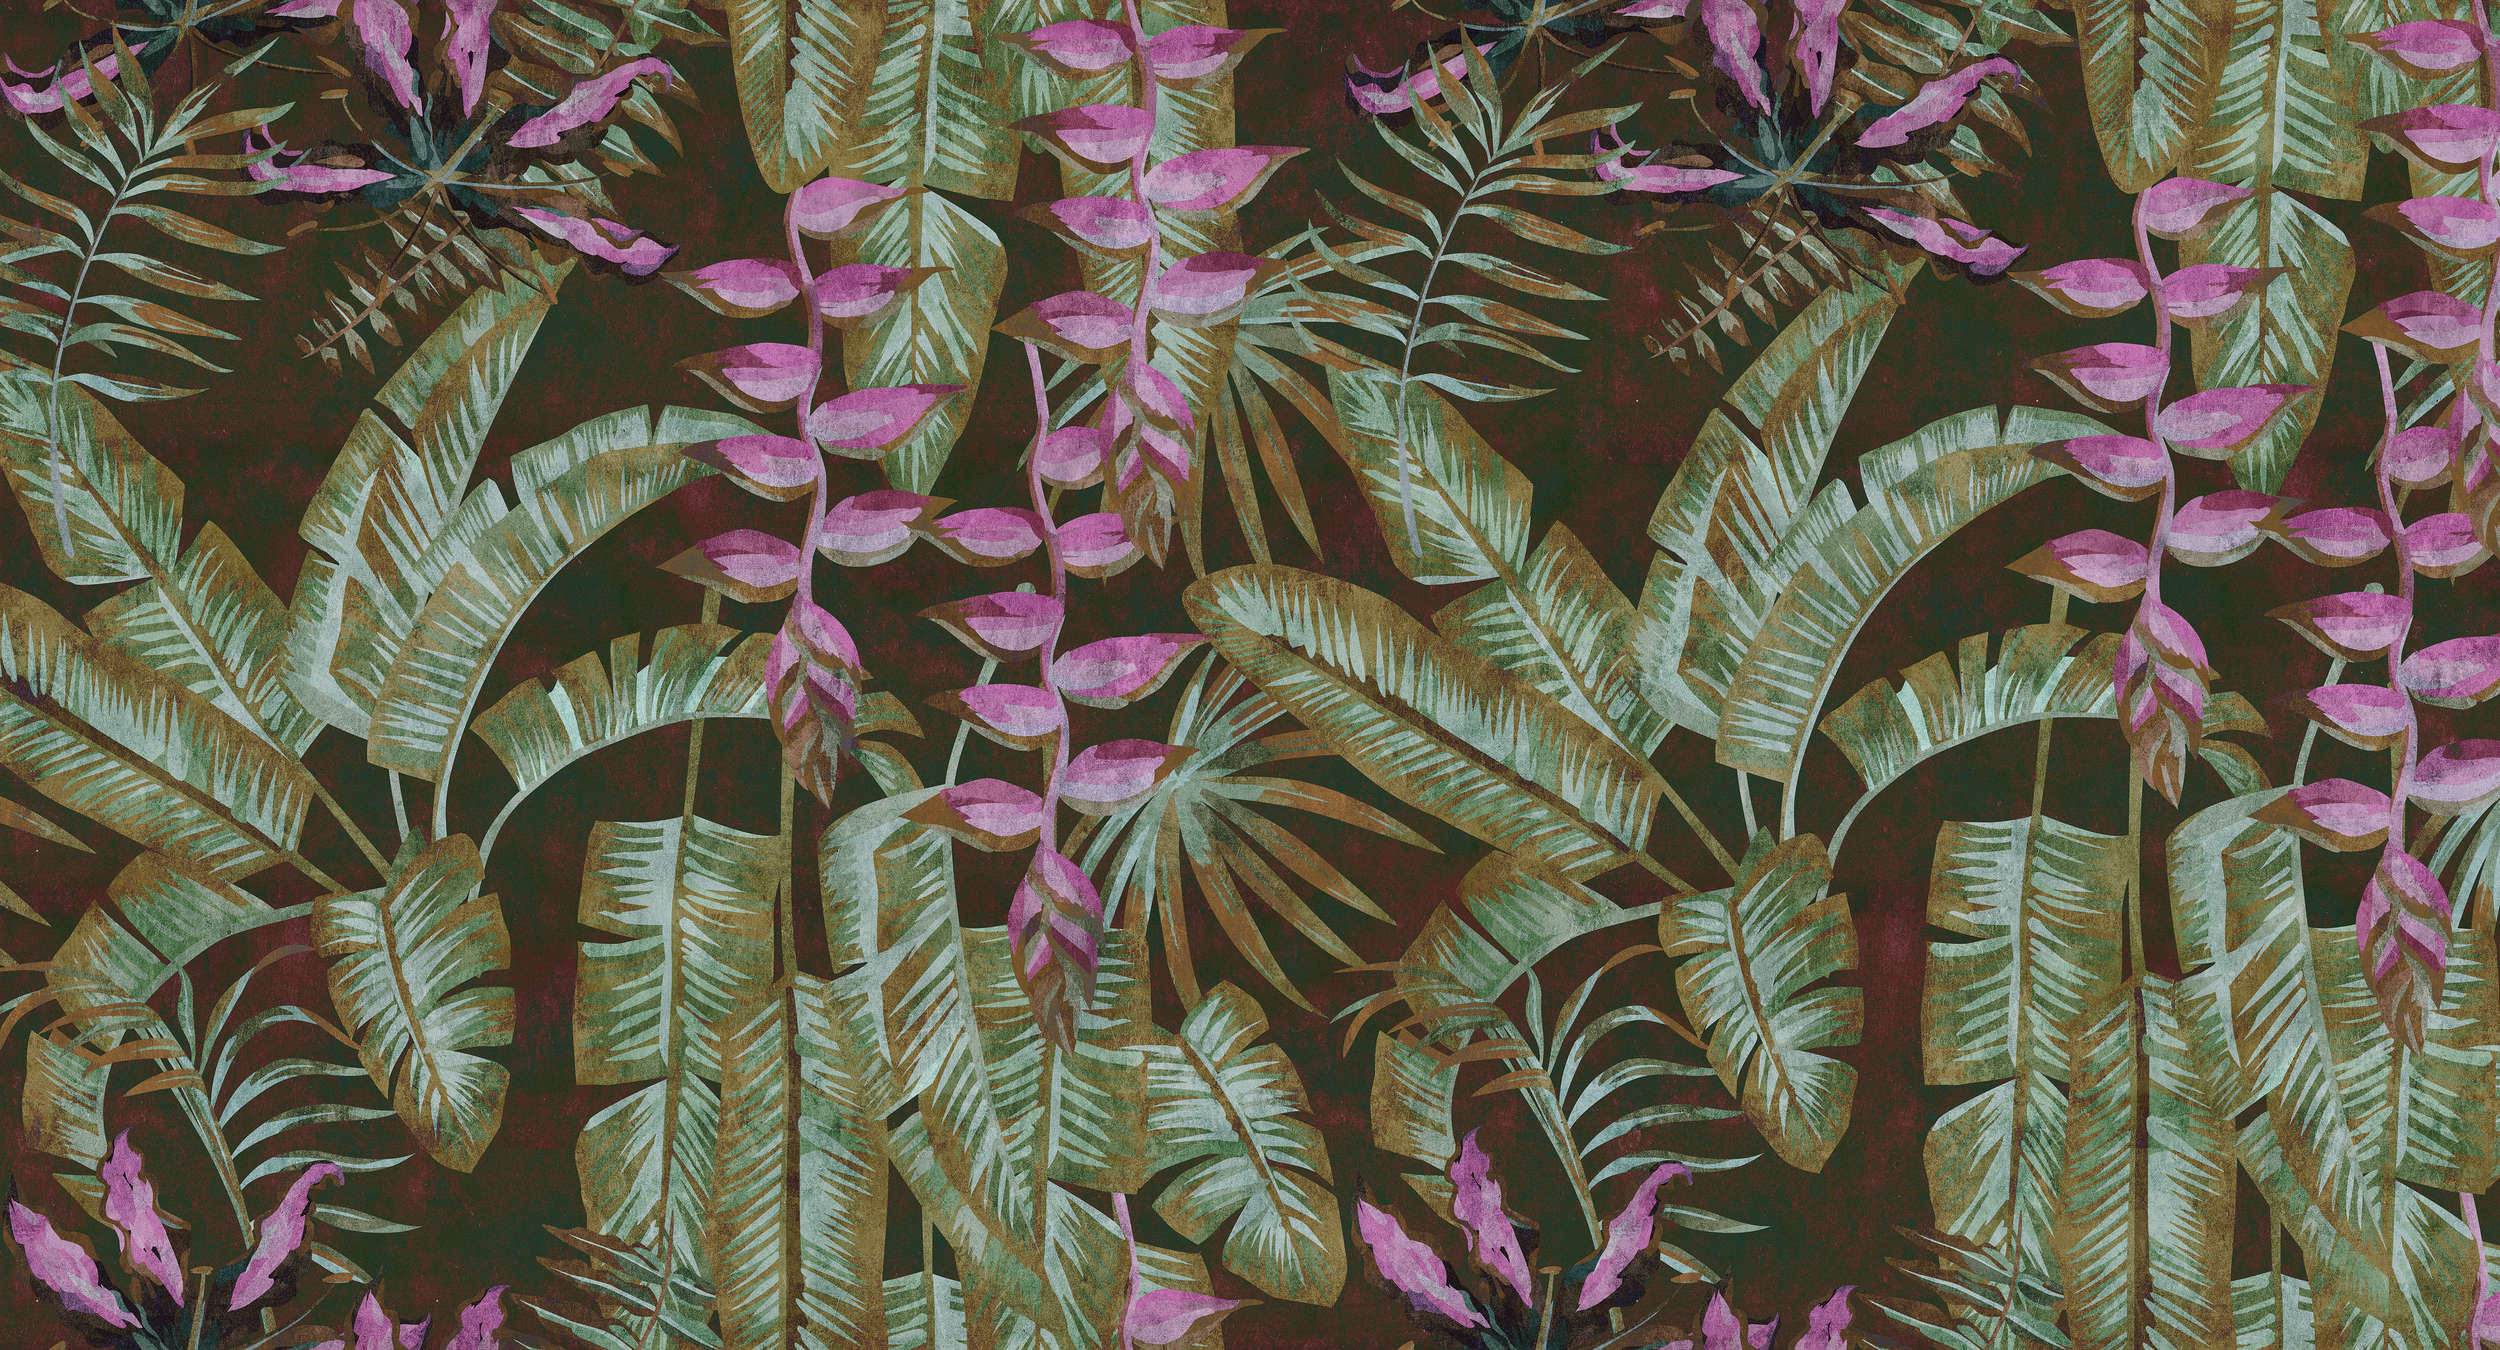             Tropicana 1 - Dschungel Fototapete mit Bananenblättern & Farnen-Löschpapier Struktur – Grün, Violett | Perlmutt Glattvlies
        